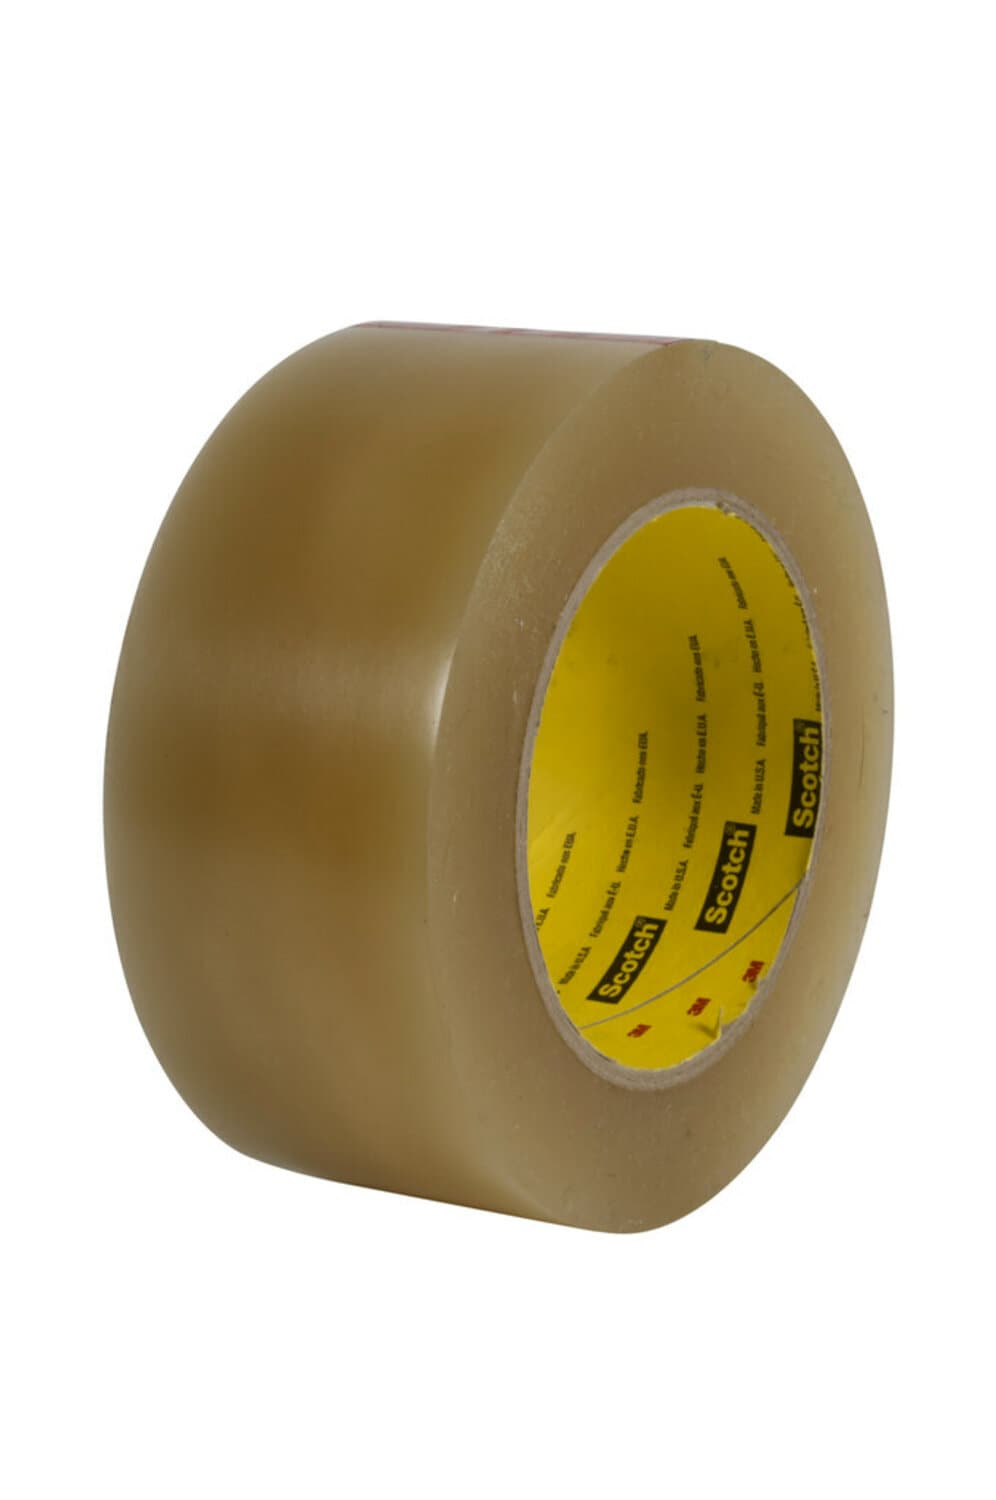 7000047486 - 3M Vinyl Tape 477, Transparent, 1 in x 36 yd, 7.2 mil, 36 rolls per
case